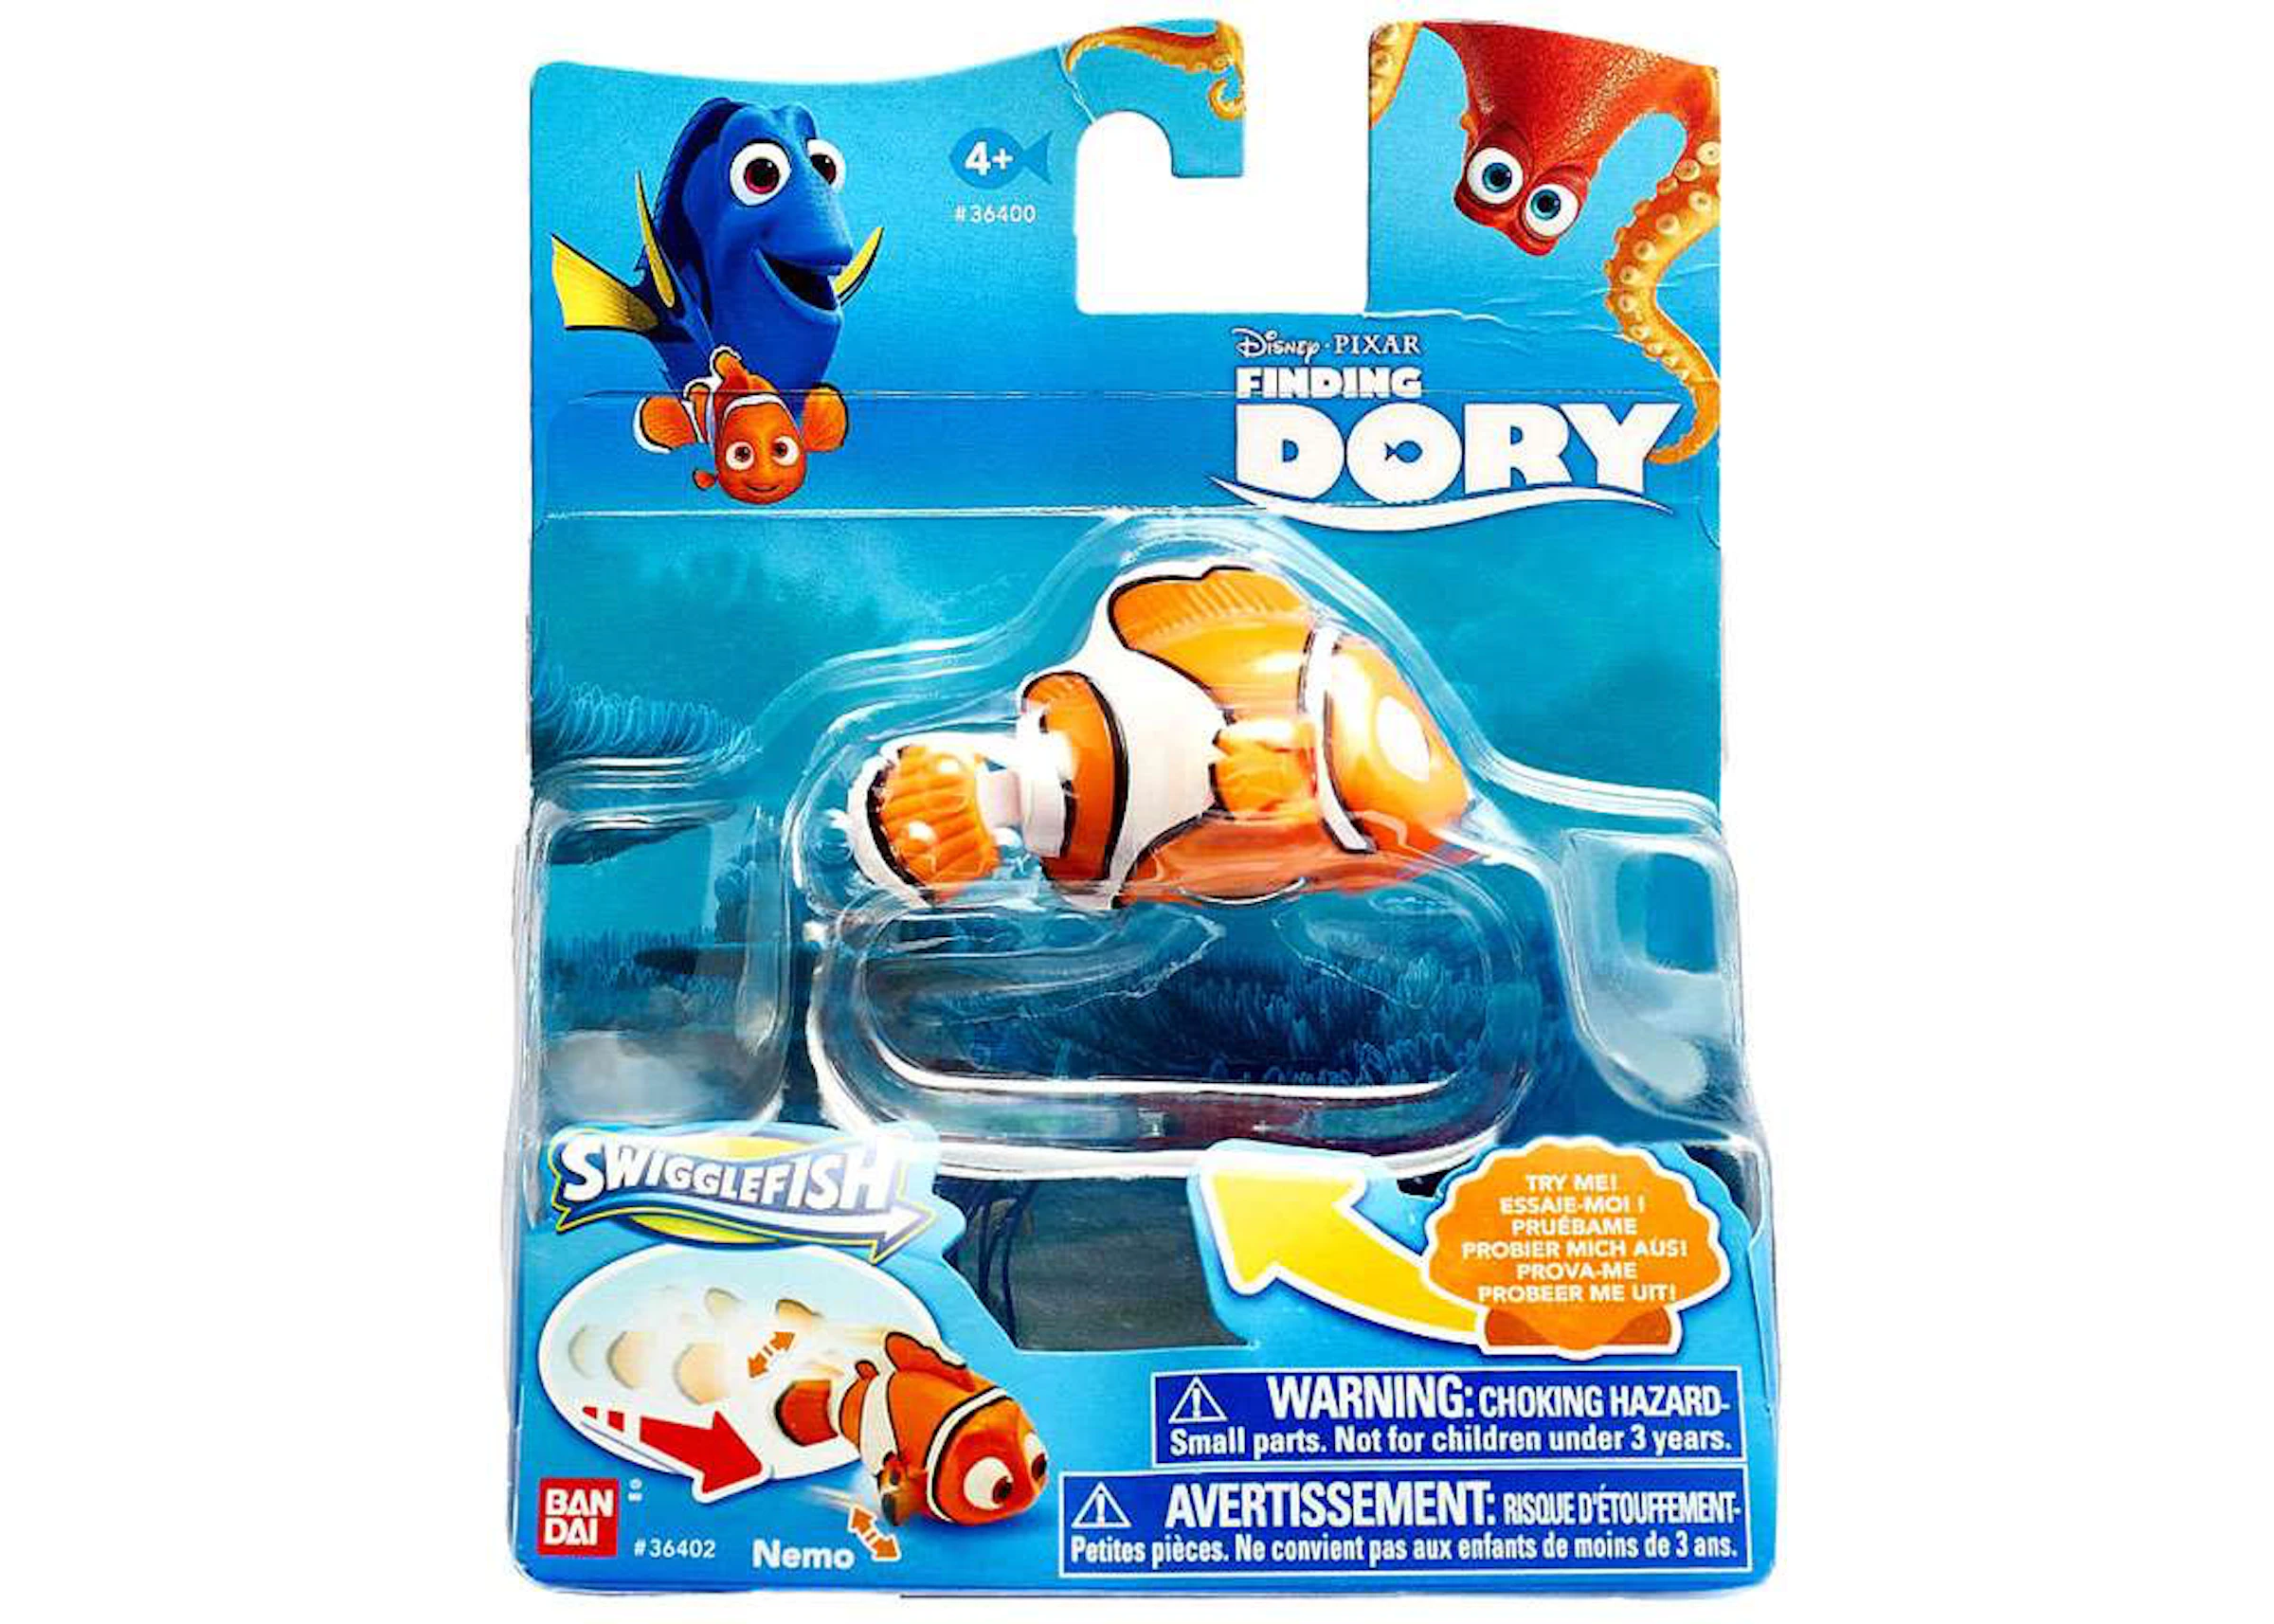 Bandai America Disney / Pixar Swigglefish Finding Dory Nemo Figure - US